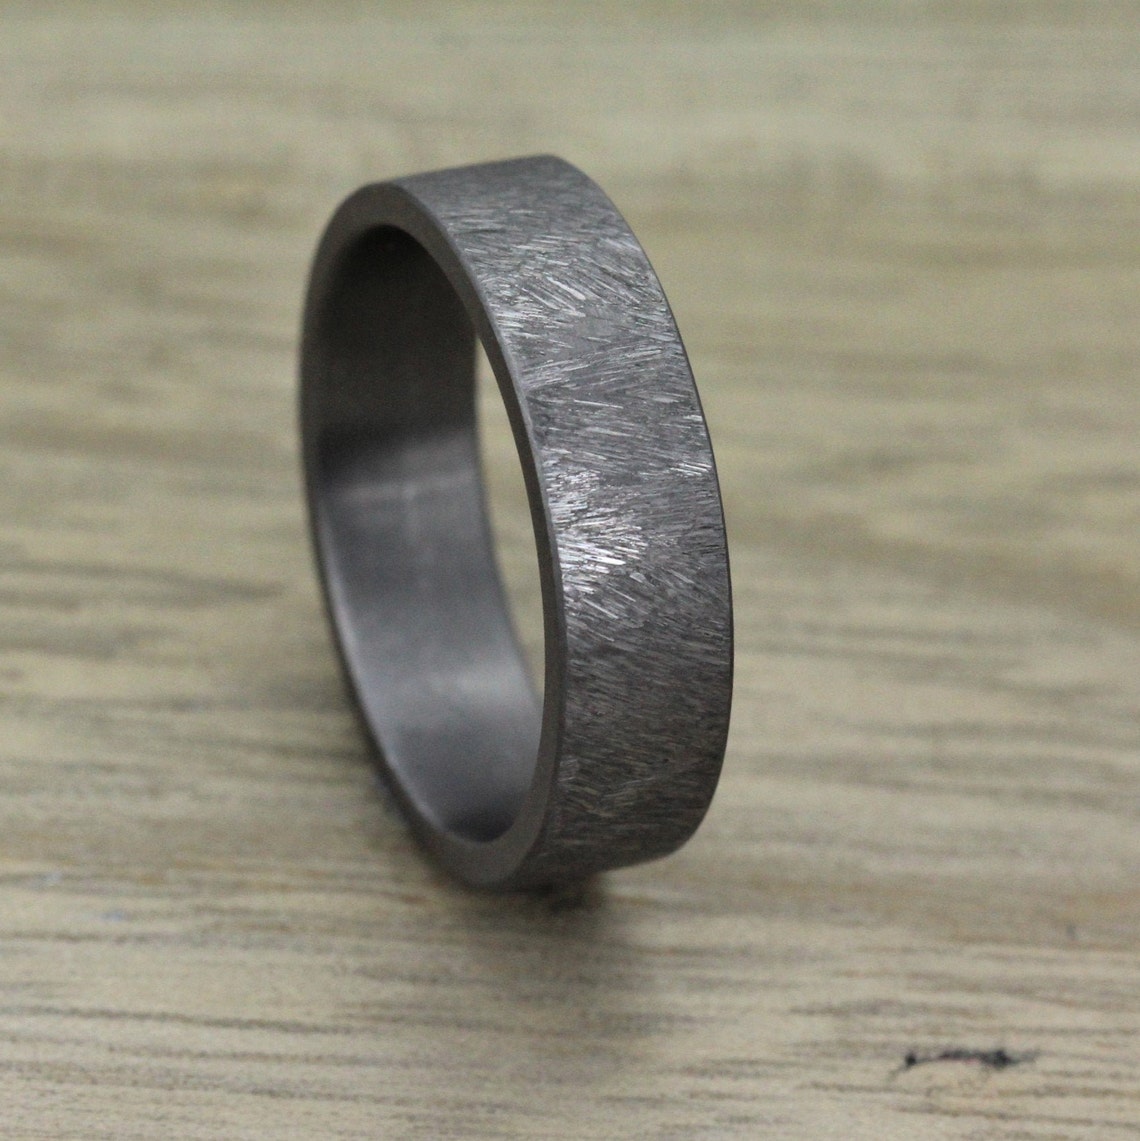 Tantalum Wedding Ring in 4 to 7mm width. Matt Finish